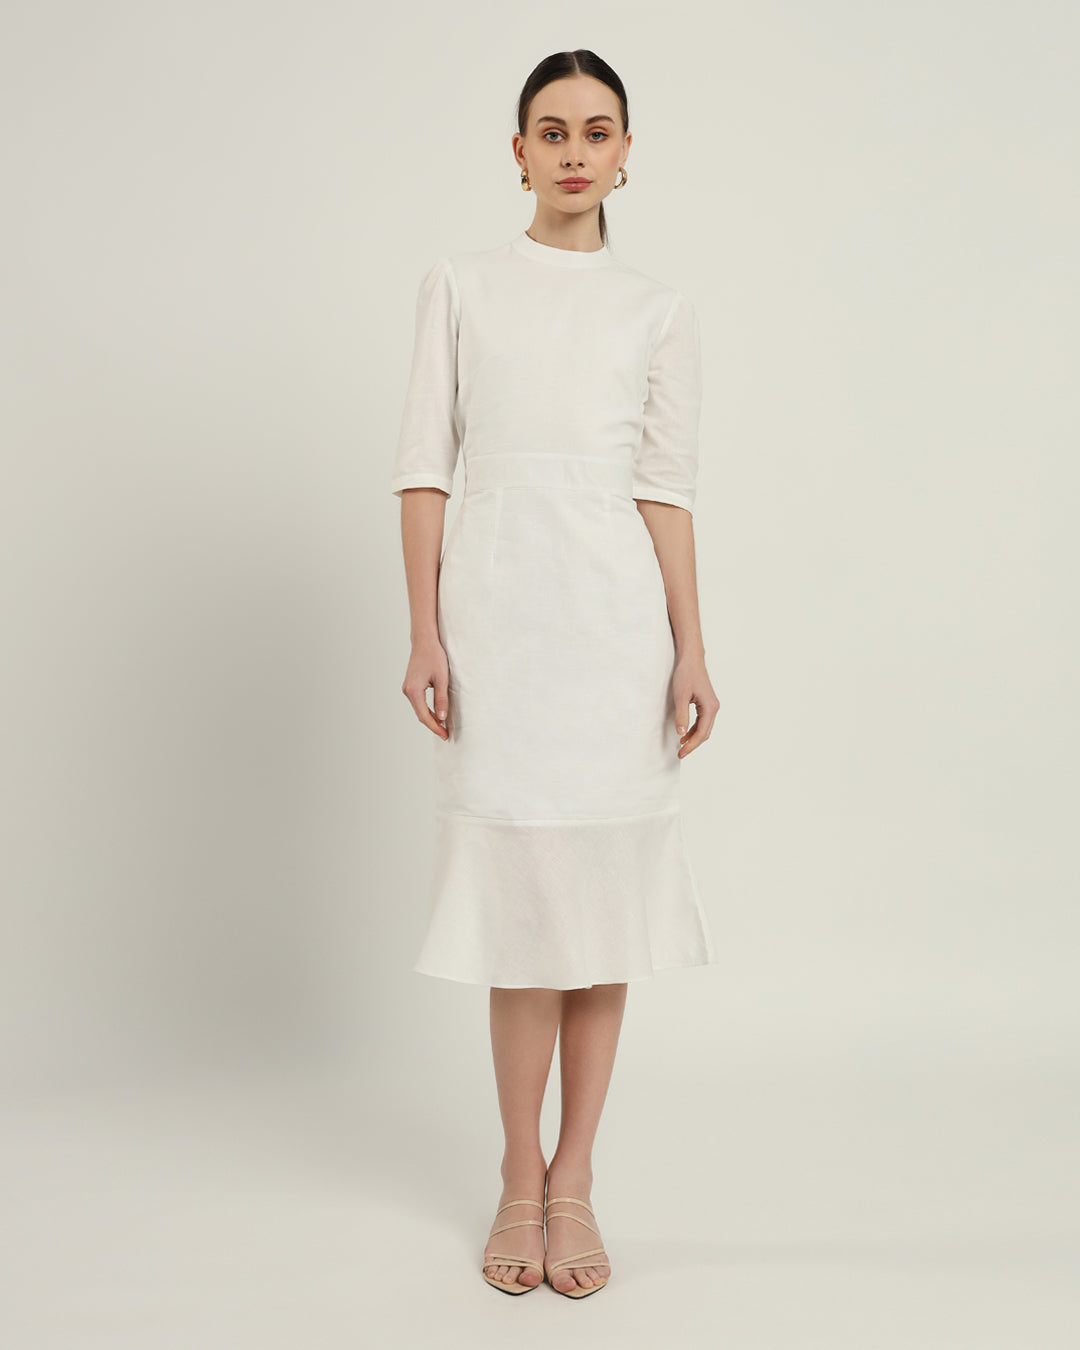 The Charlotte Daisy White Linen Dress